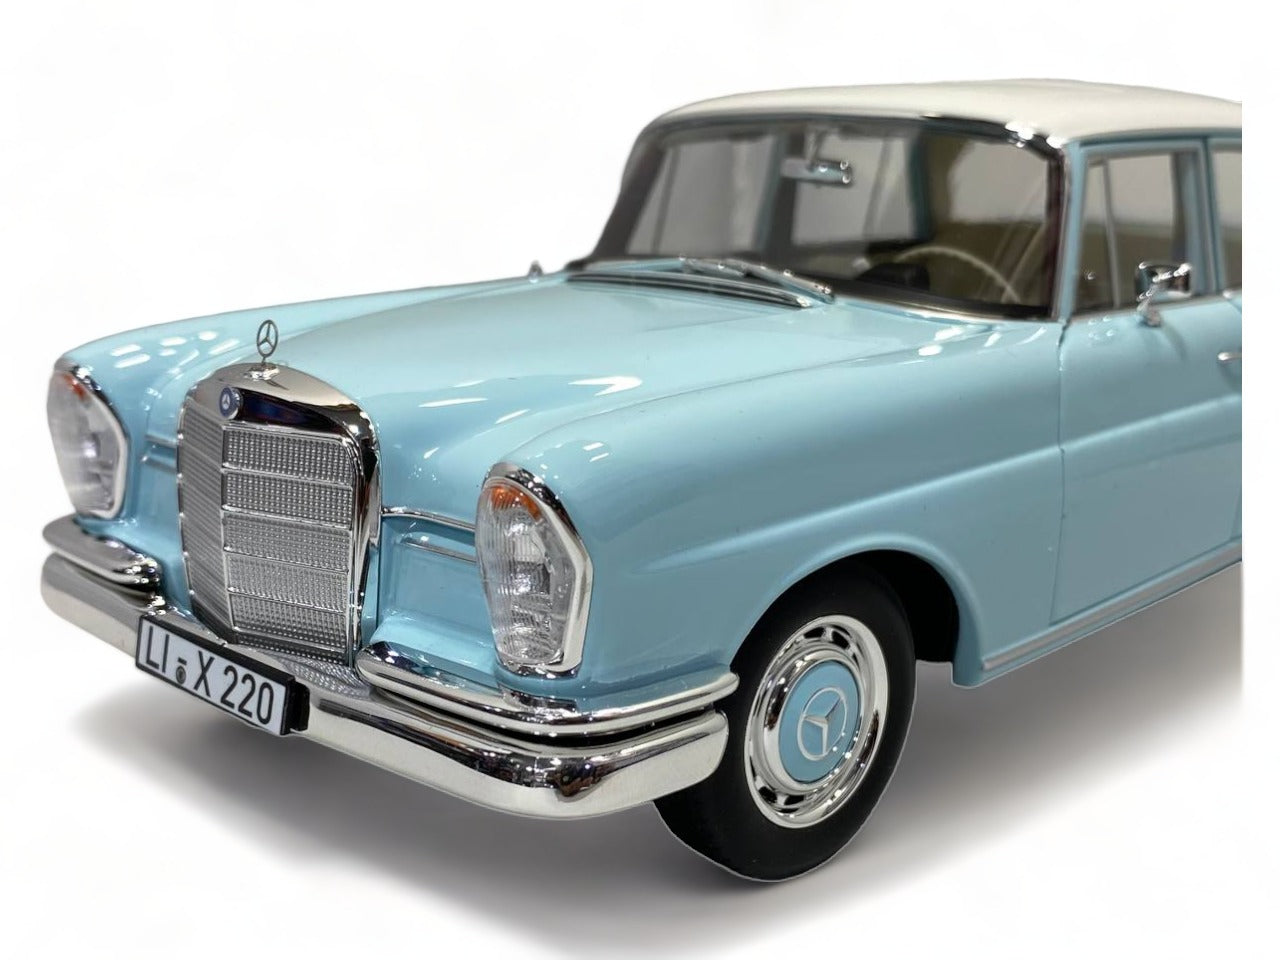 1/18 Diecast Norev Mercedes-Benz 220 S Light Blue 1965 Scale Model Car|Sold in Dturman.com Dubai UAE.